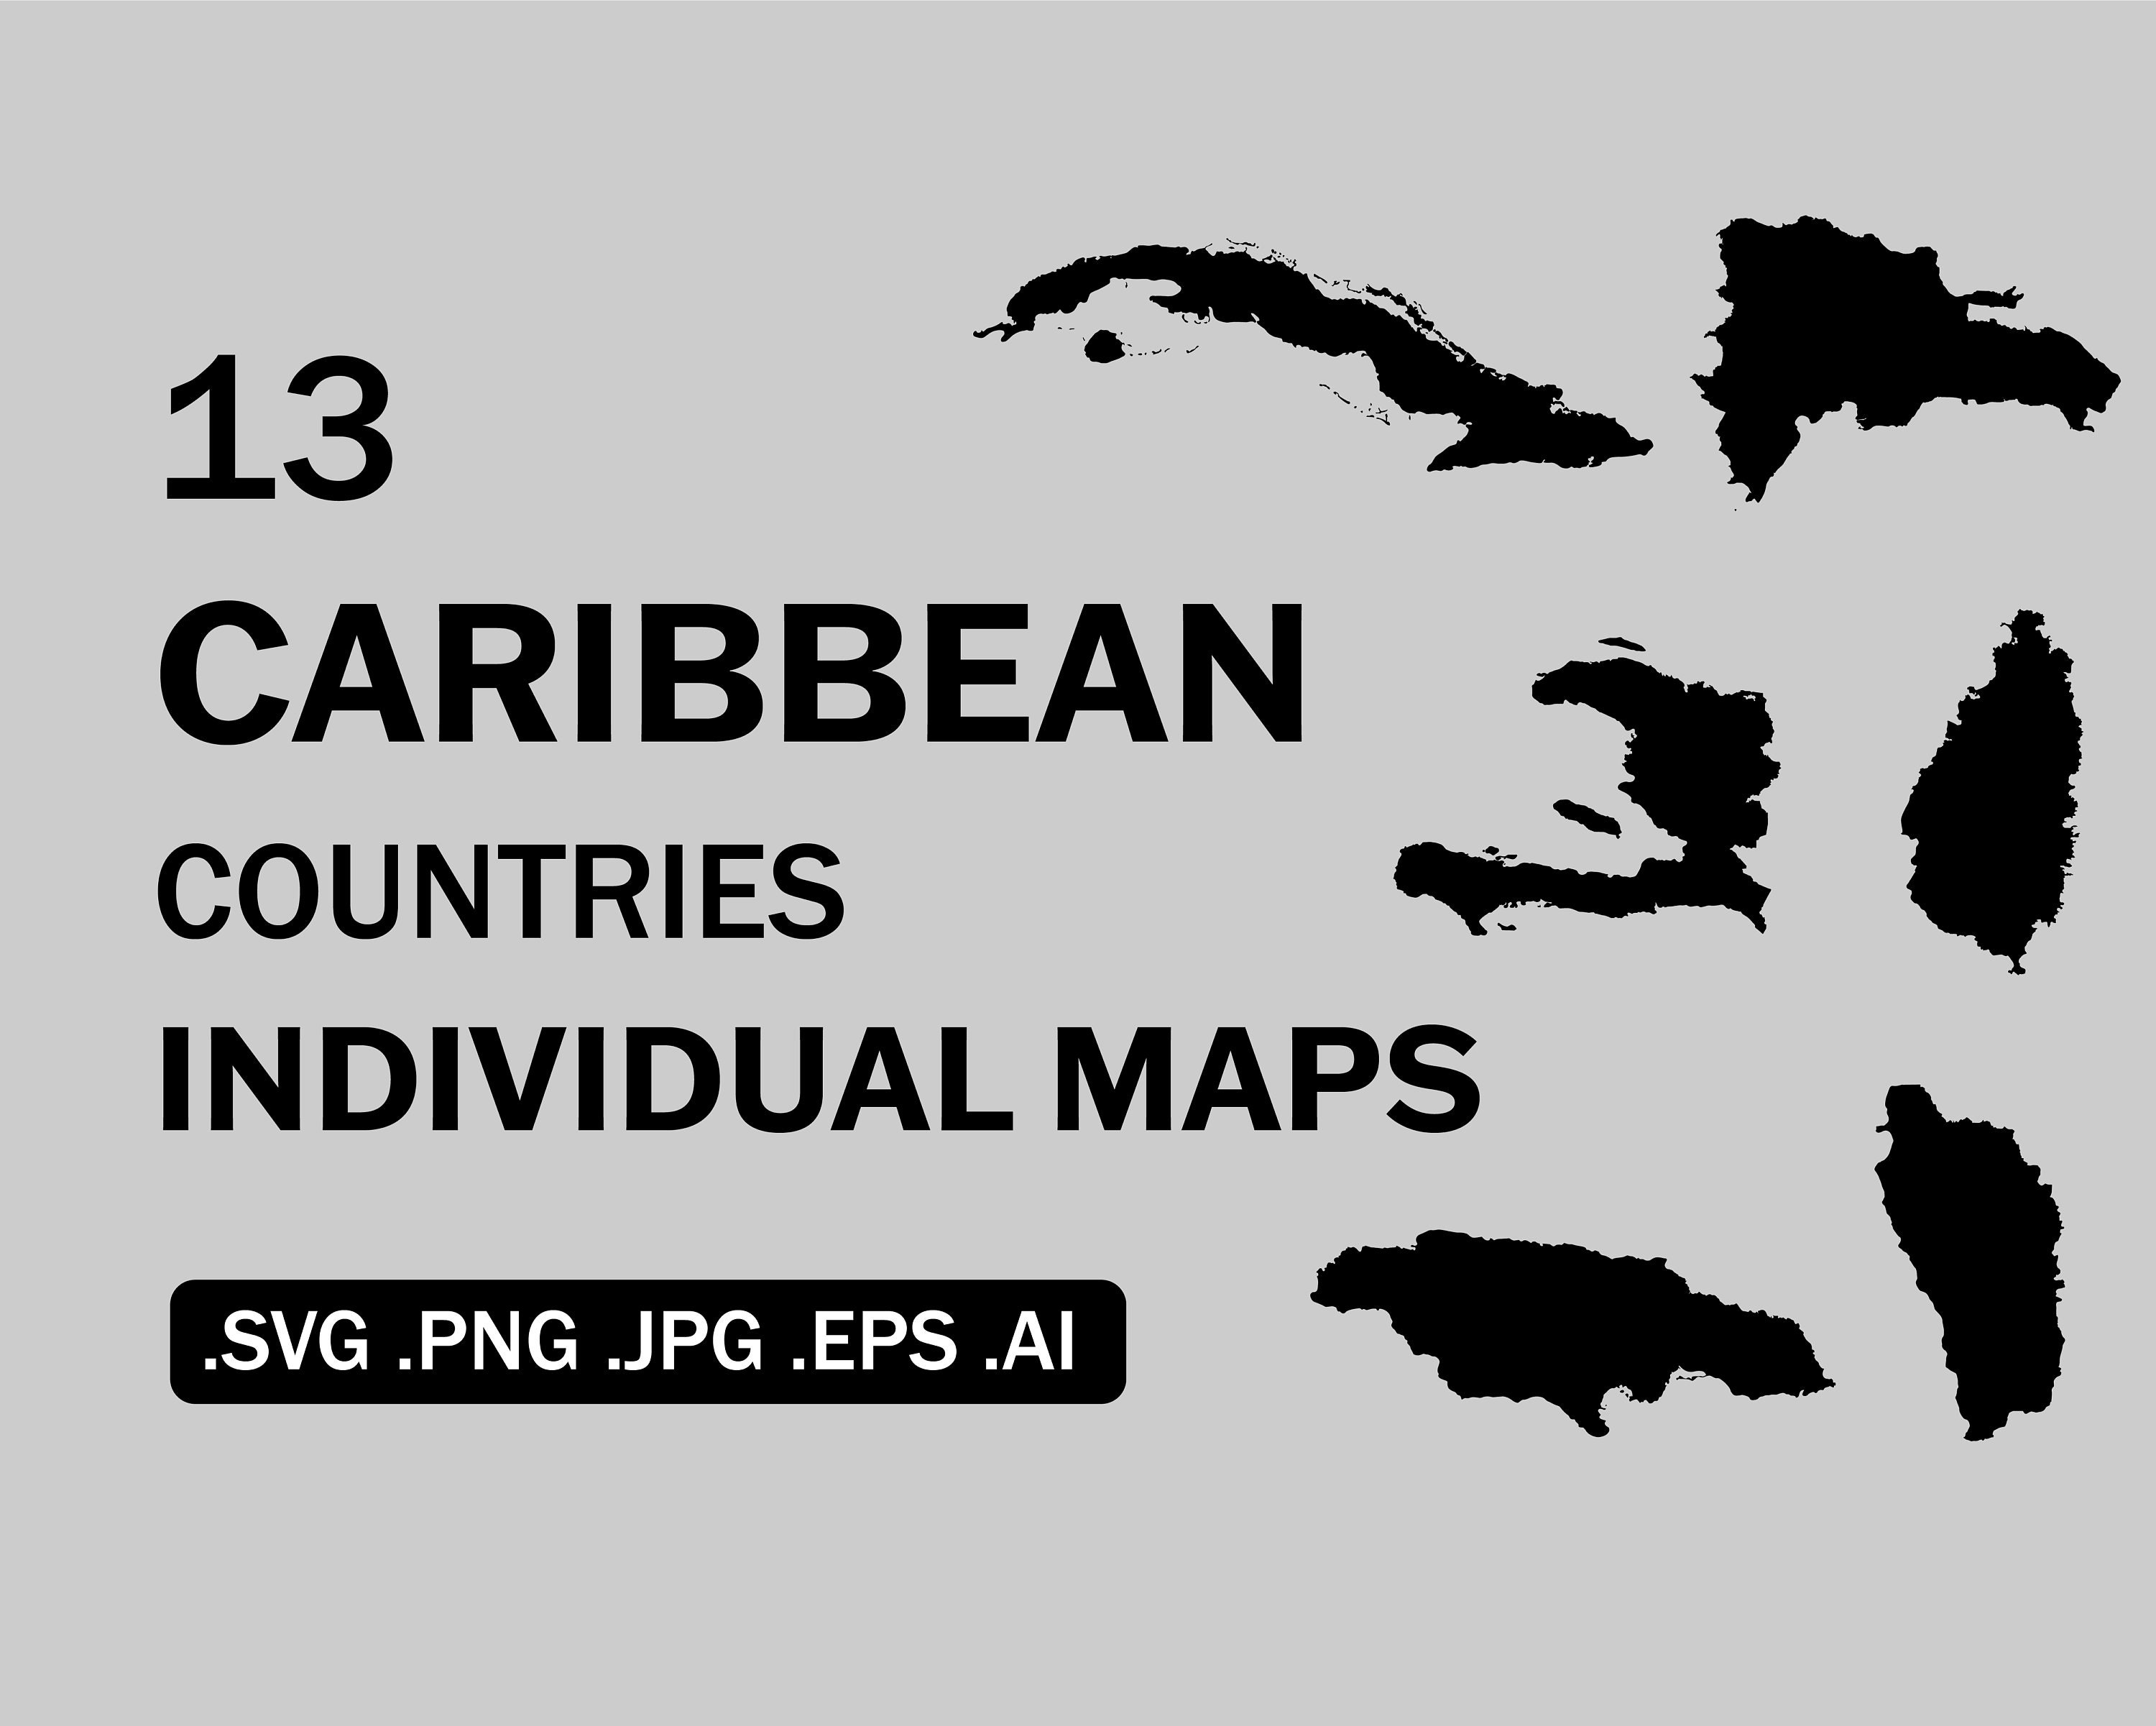 clipart caribbean islands